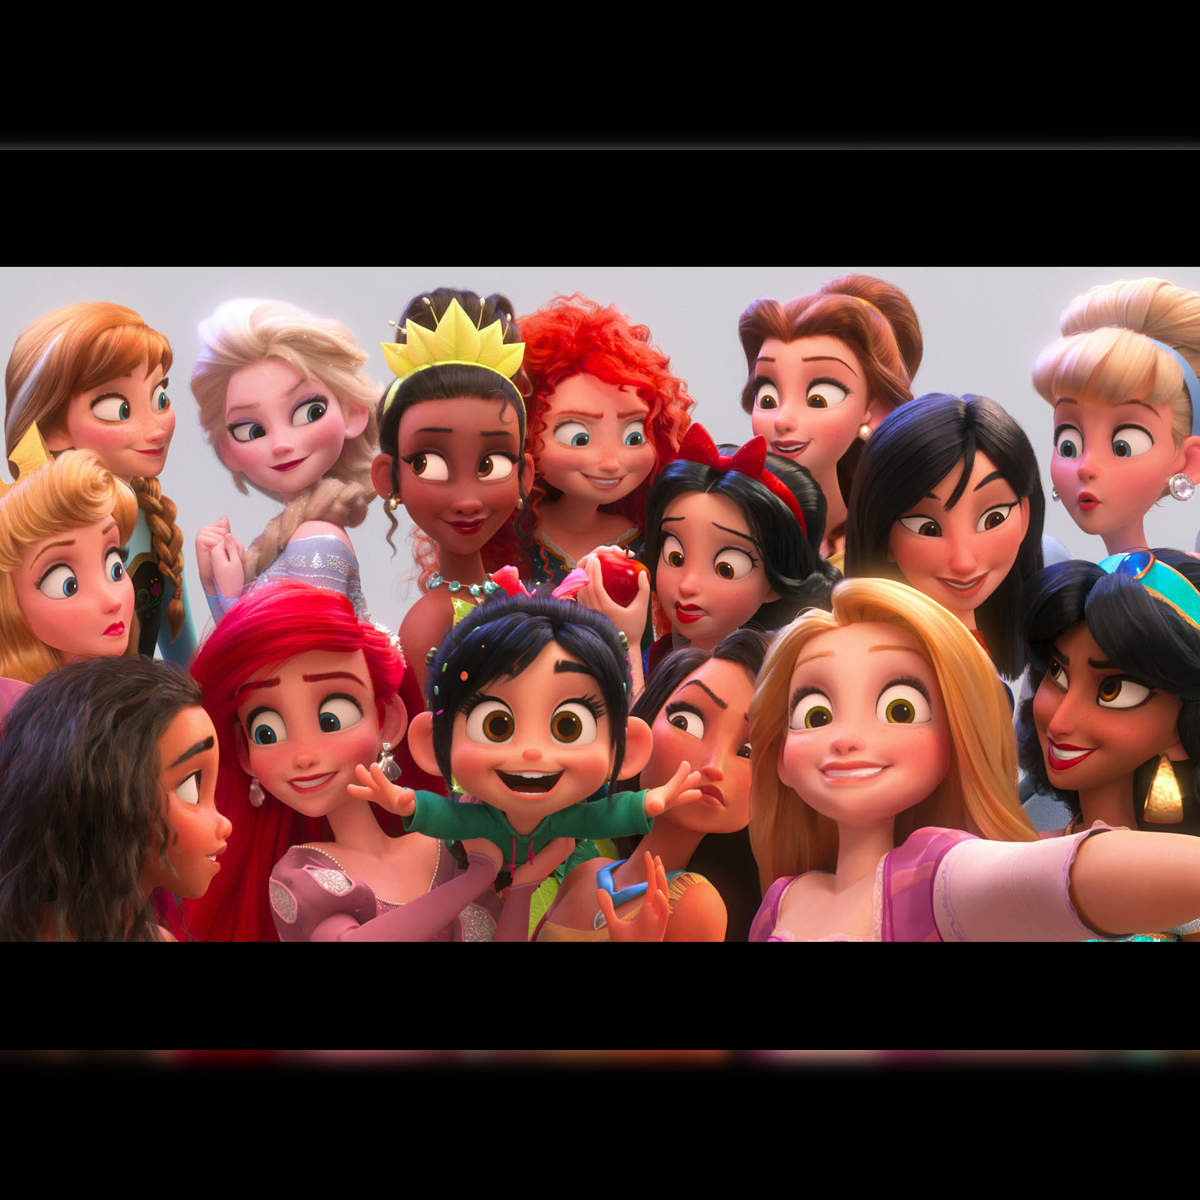 Disney princesses: Ever seen 14 Disney princesses in one frame